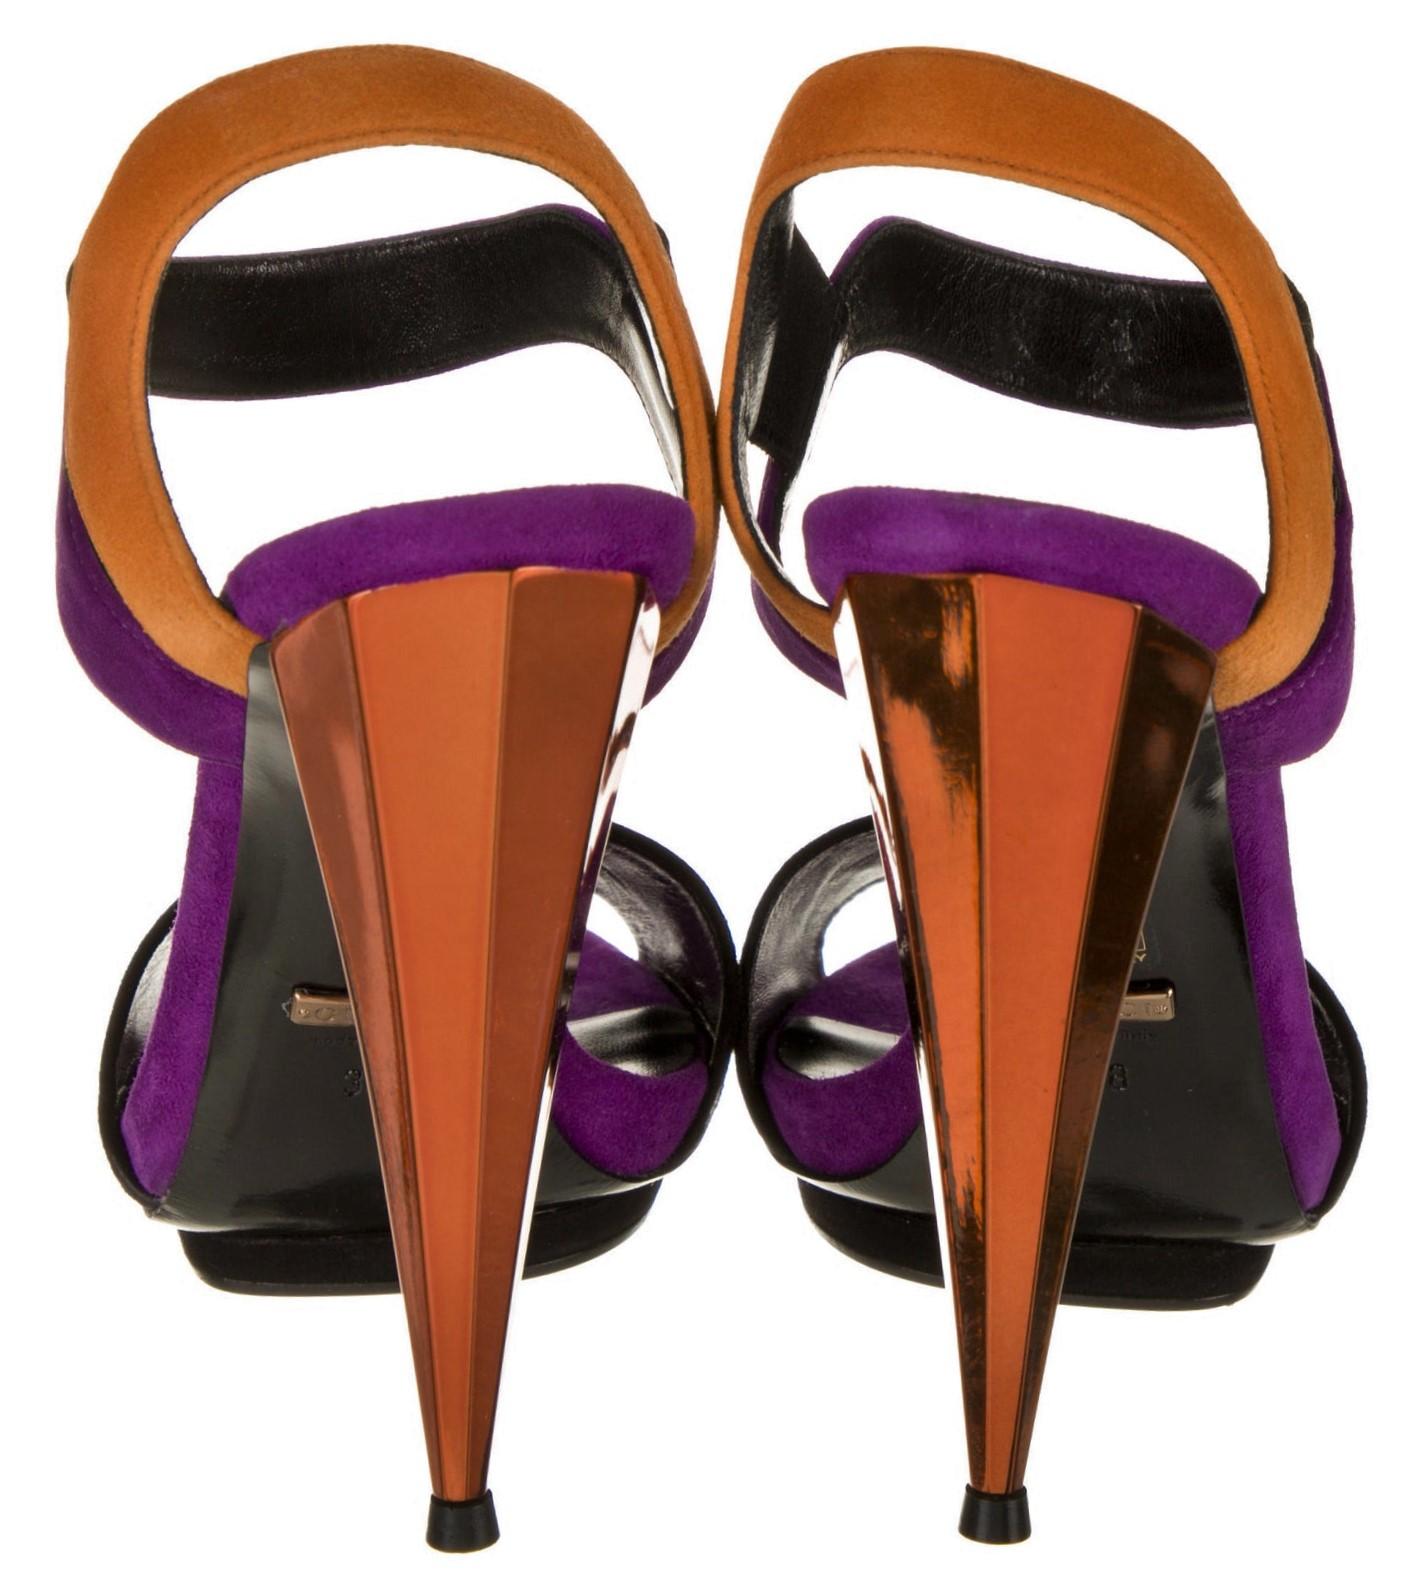 New Gucci Ad Runway 2014 Purple Orange Suede Mirrored Pump Heels Sz 39.5 In New Condition For Sale In Leesburg, VA